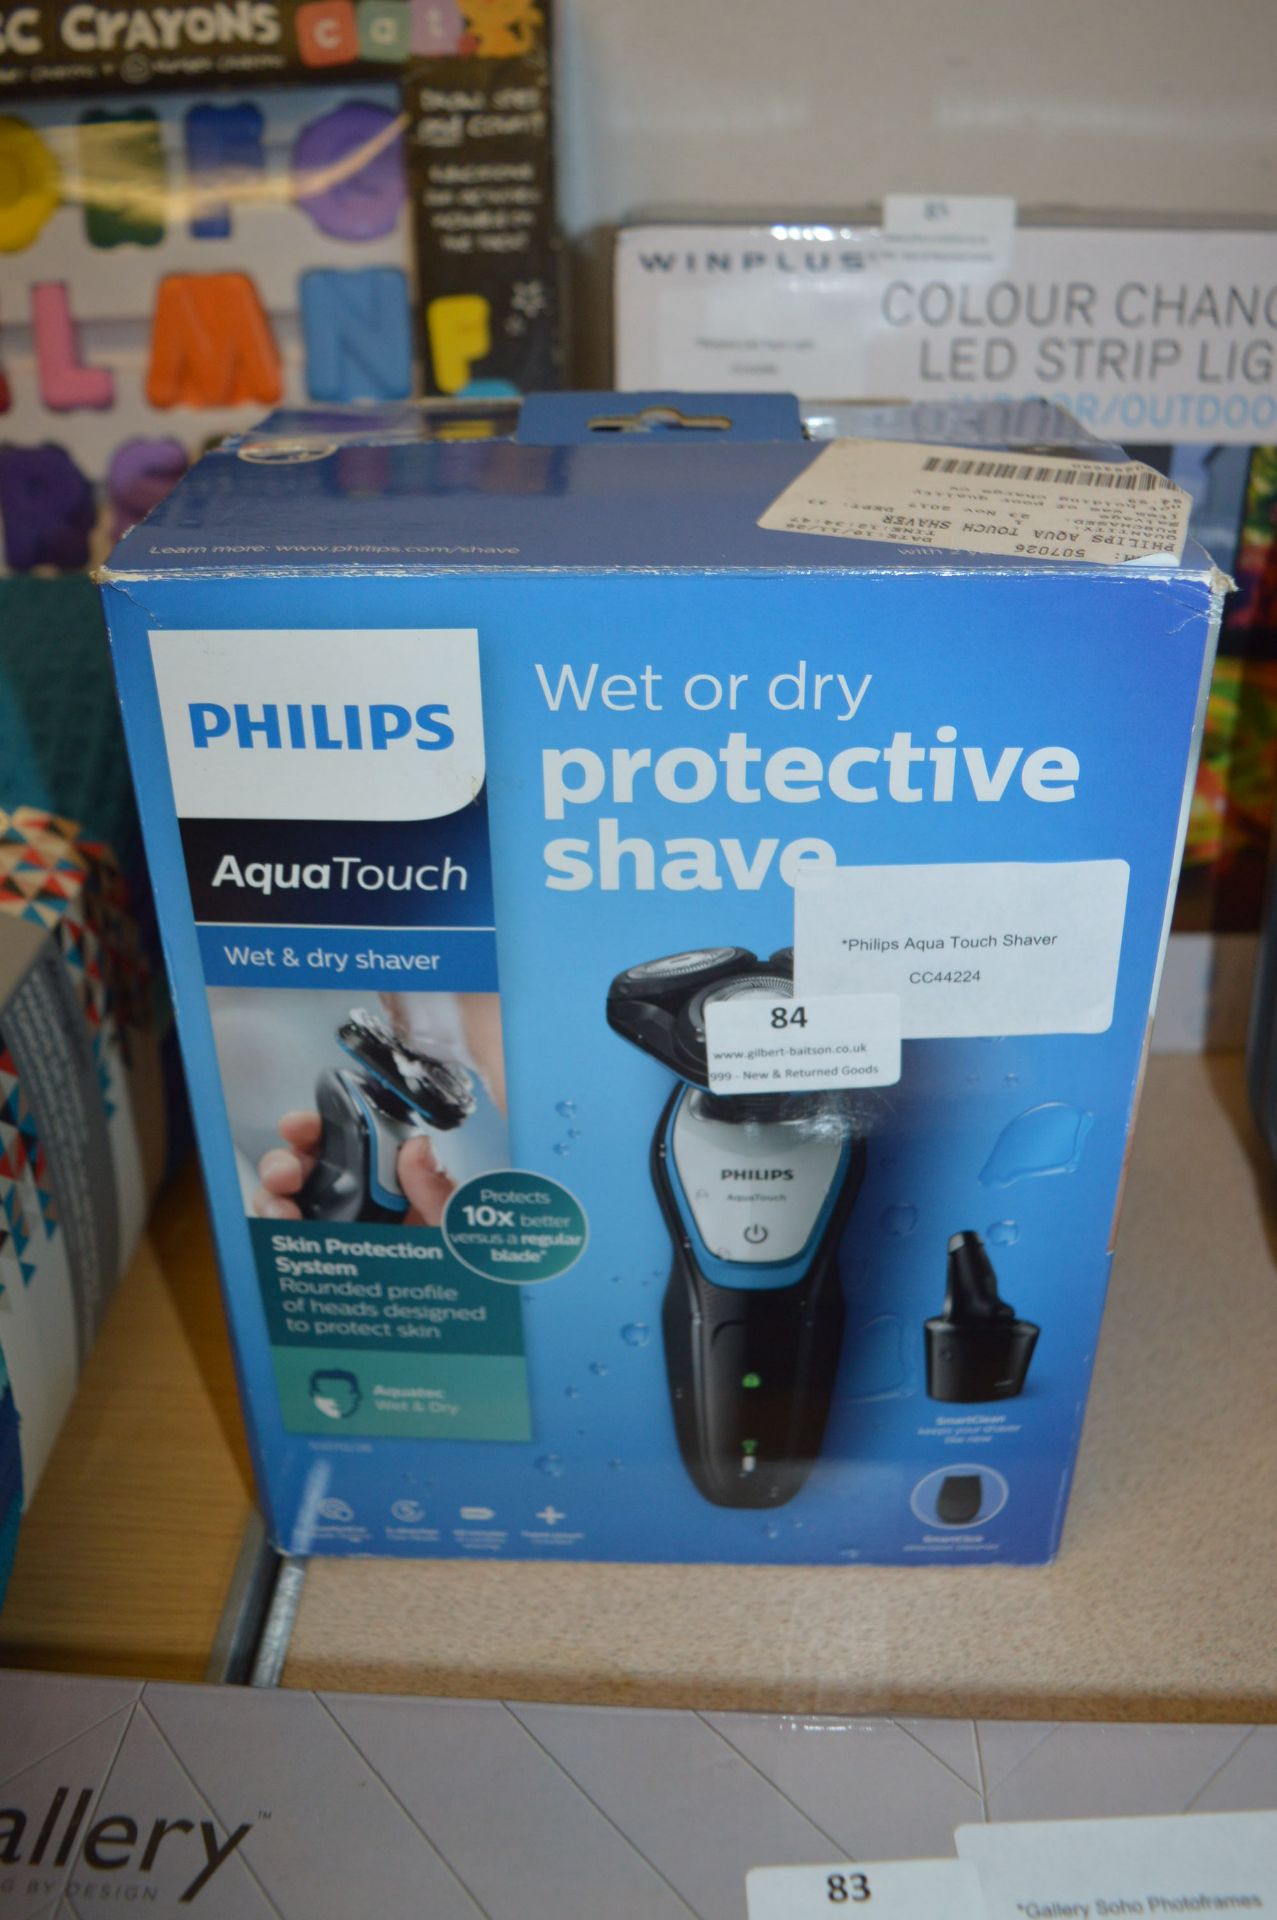 *Philips Aquatouch Shaver